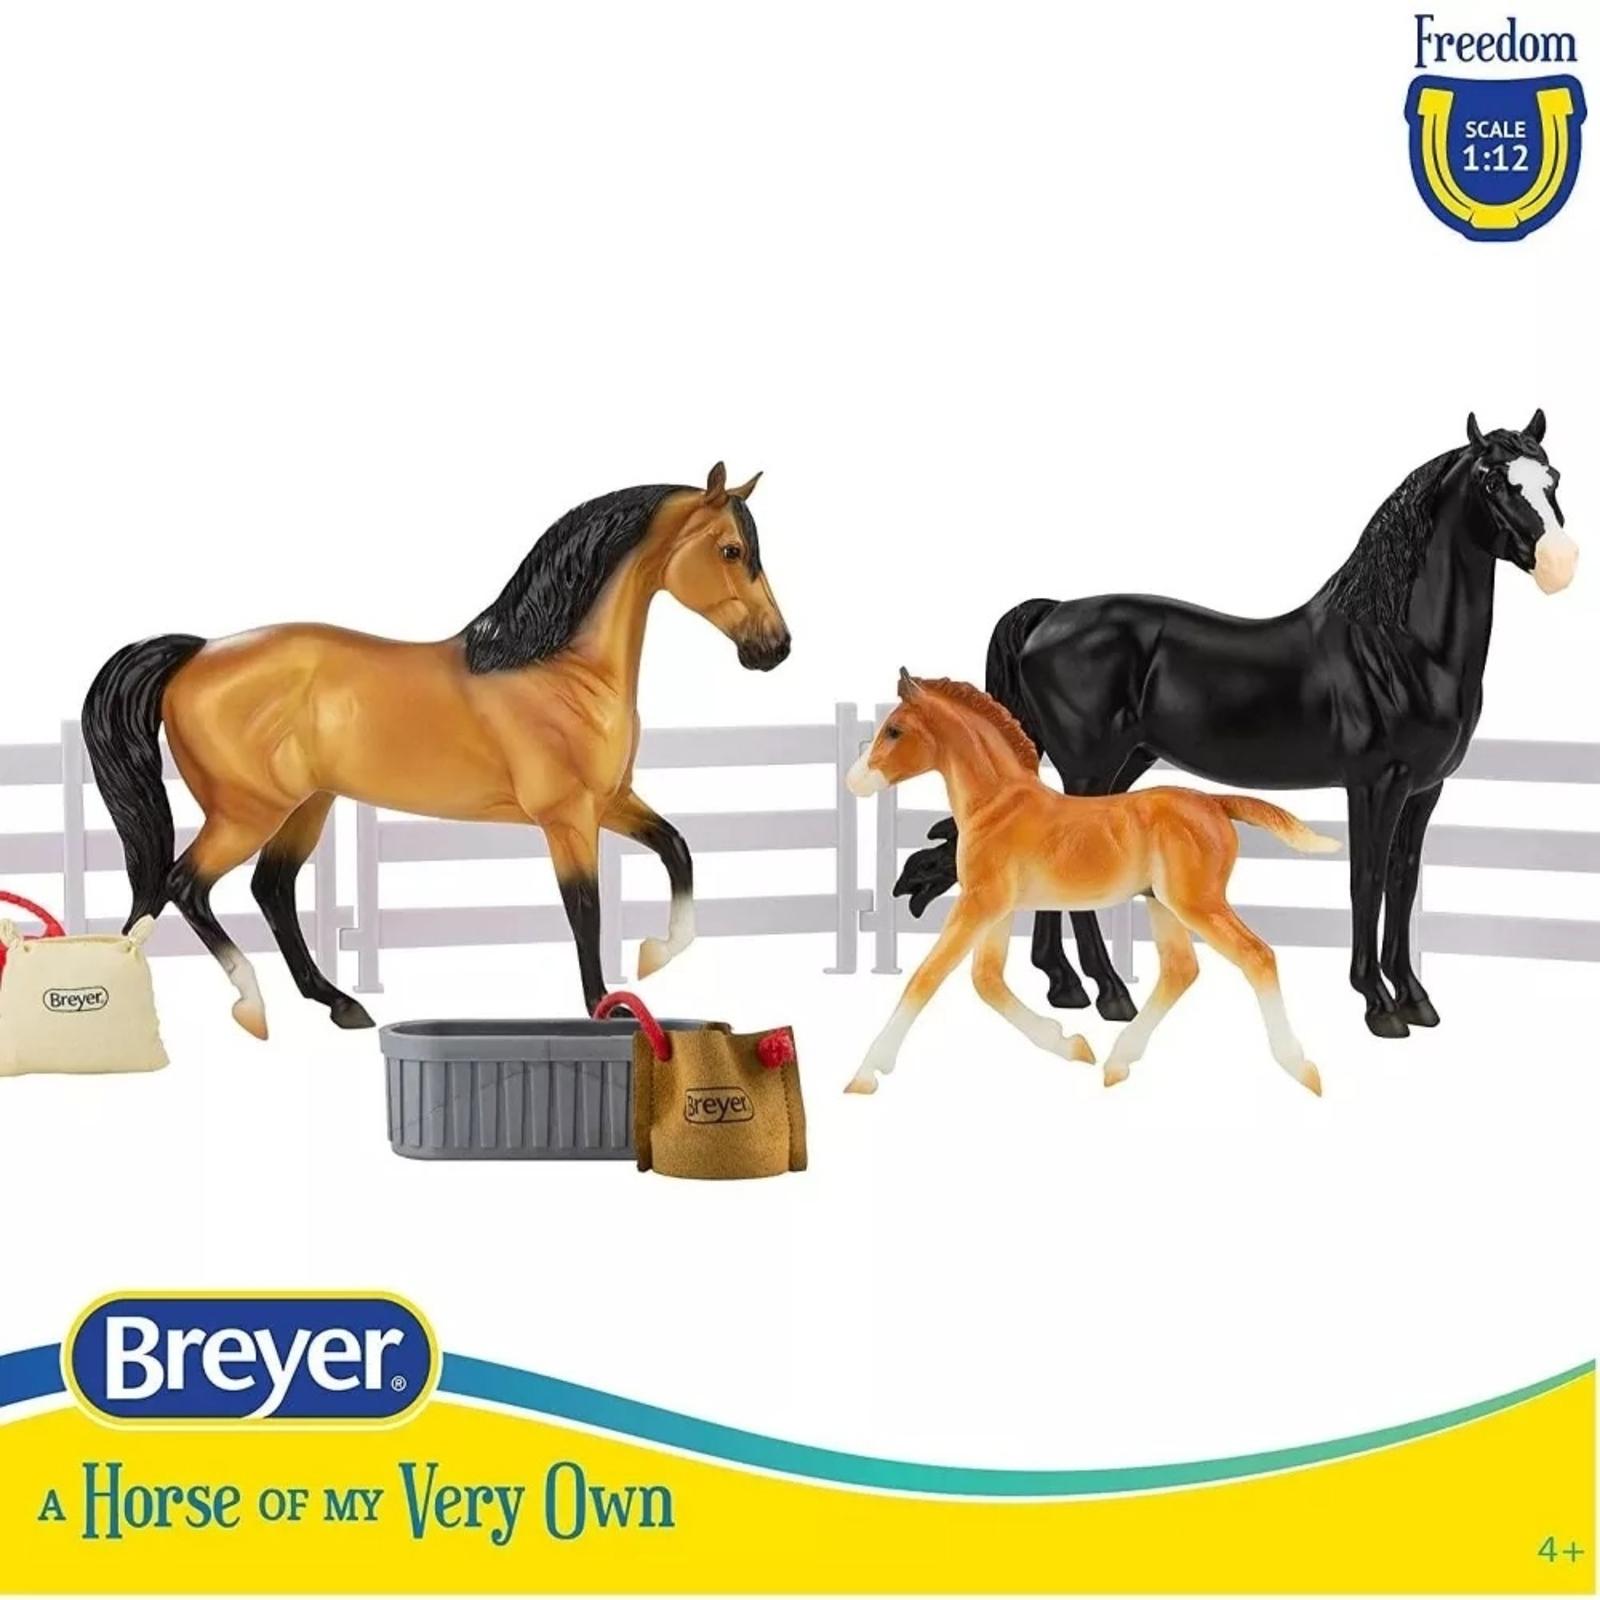 Breyer Animal Creations 1:12 Scale Model Horse Set Spanish Mustang Family